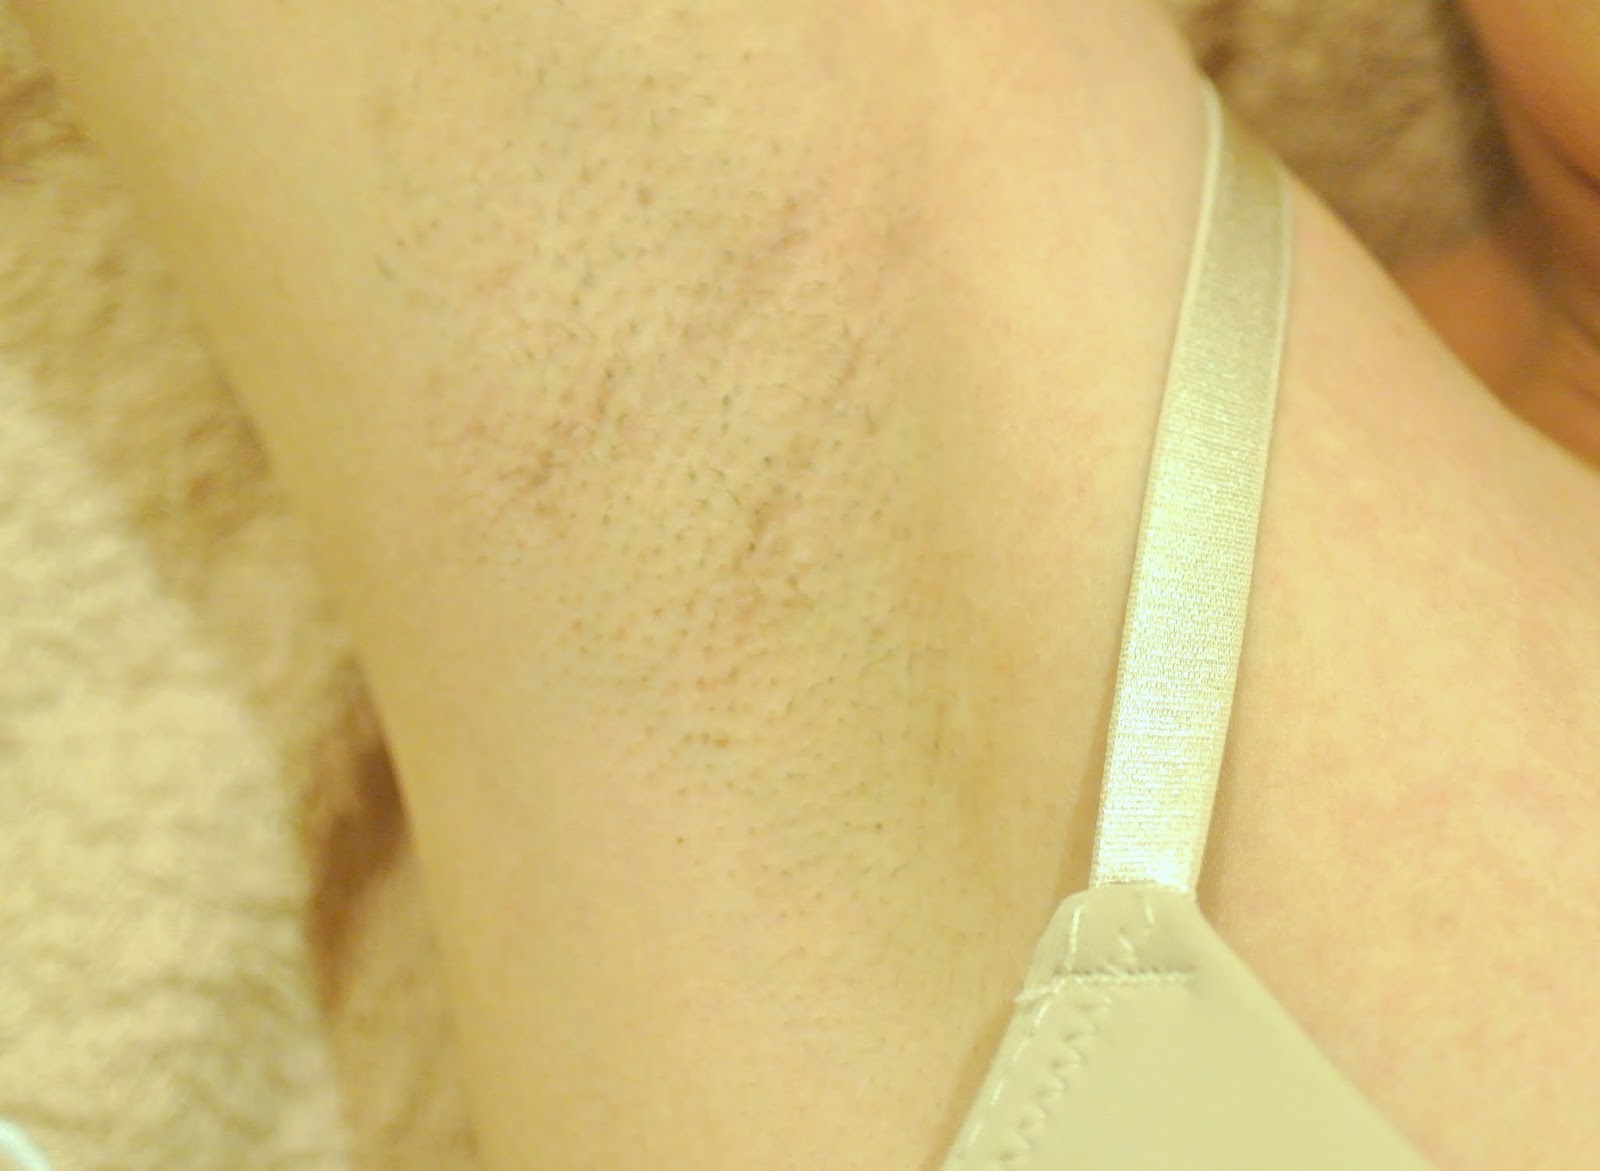 Peeling Skin Under Armpit